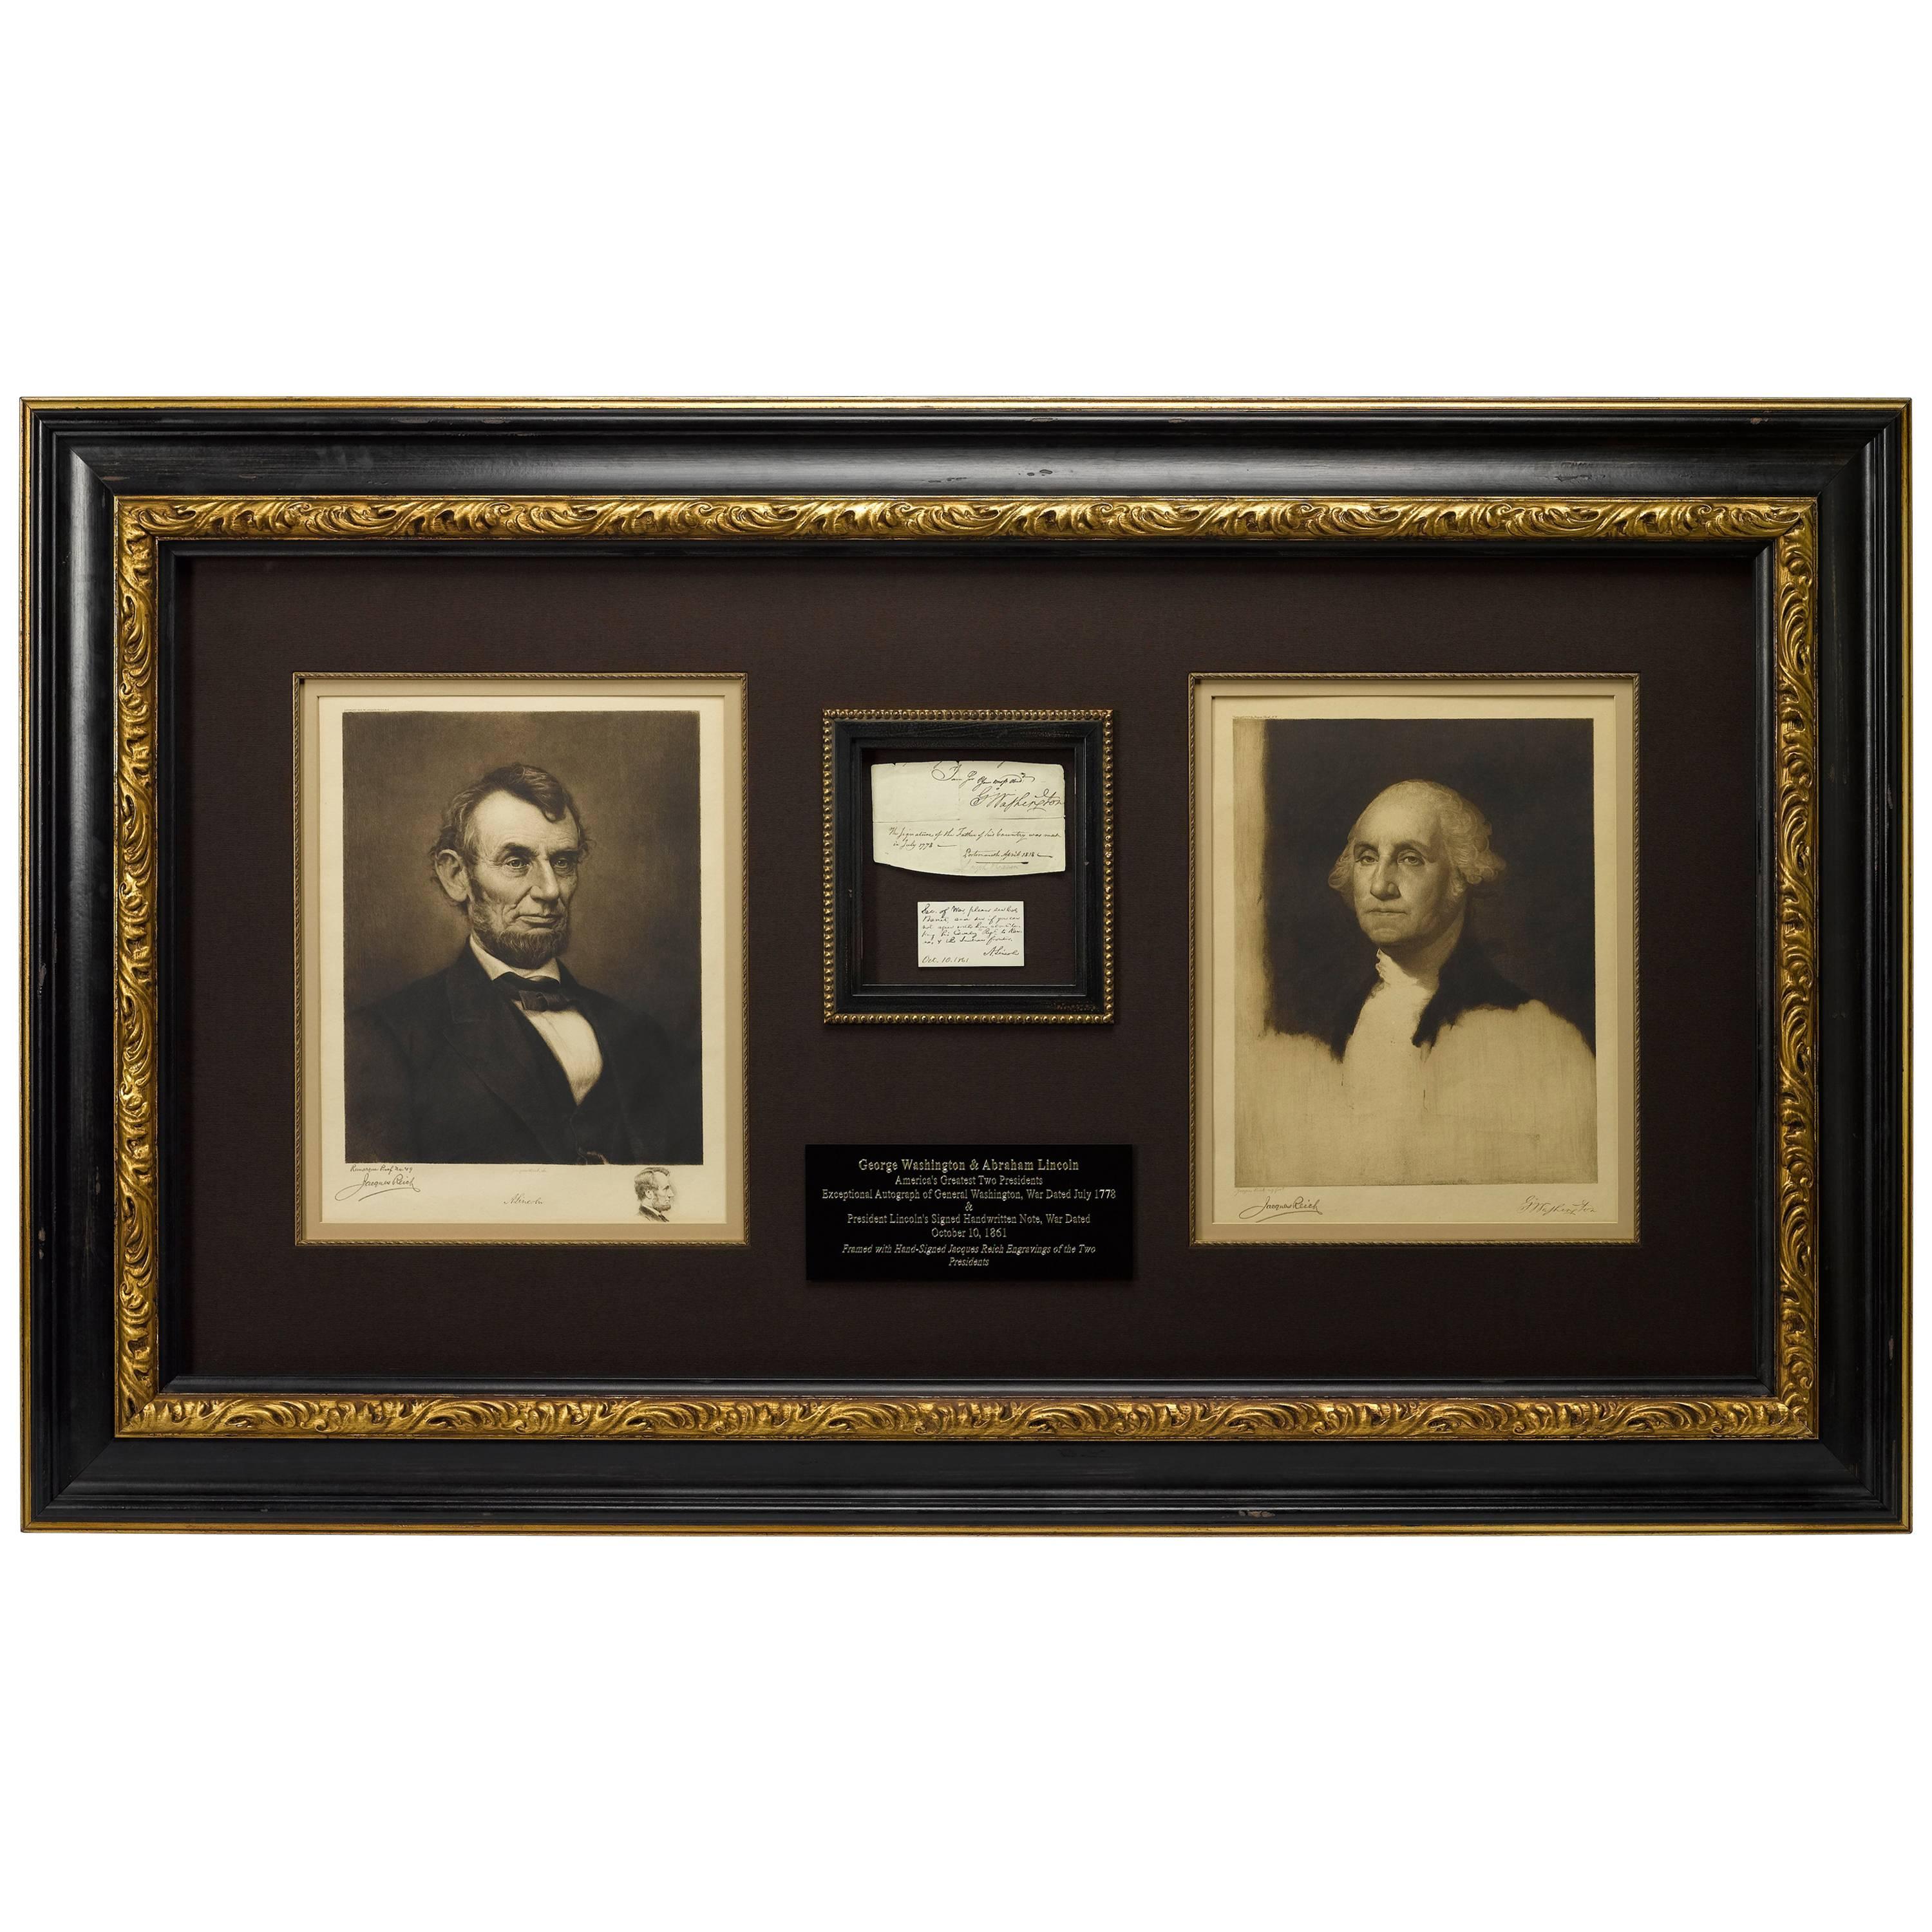 George Washington and Abraham Lincoln Original Signatures, 1778-1861